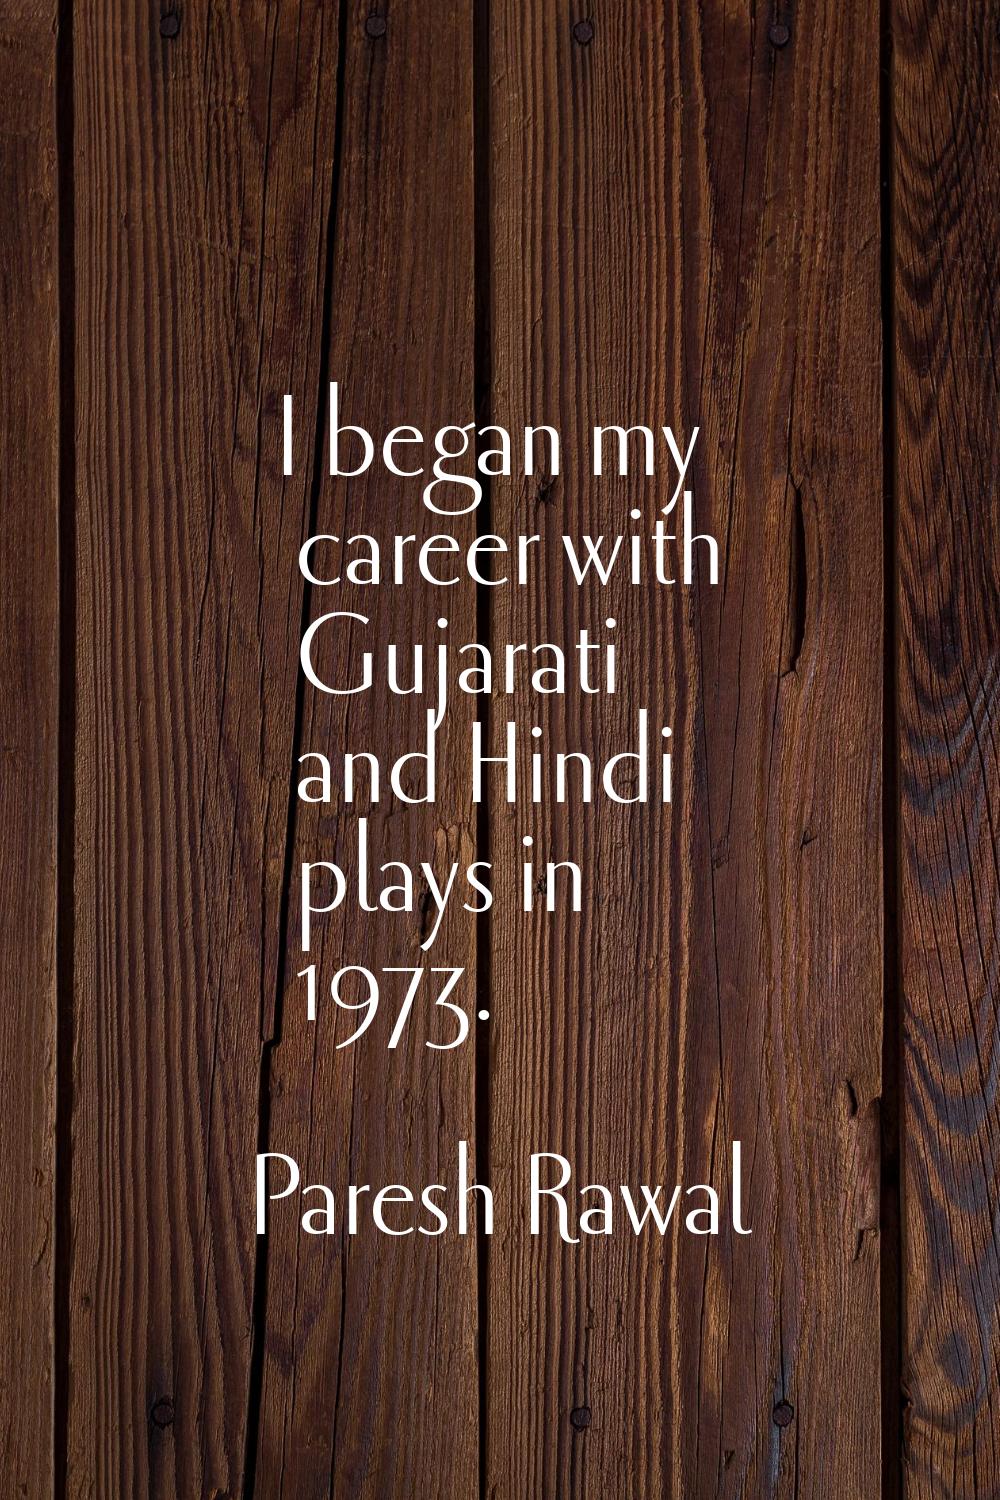 I began my career with Gujarati and Hindi plays in 1973.